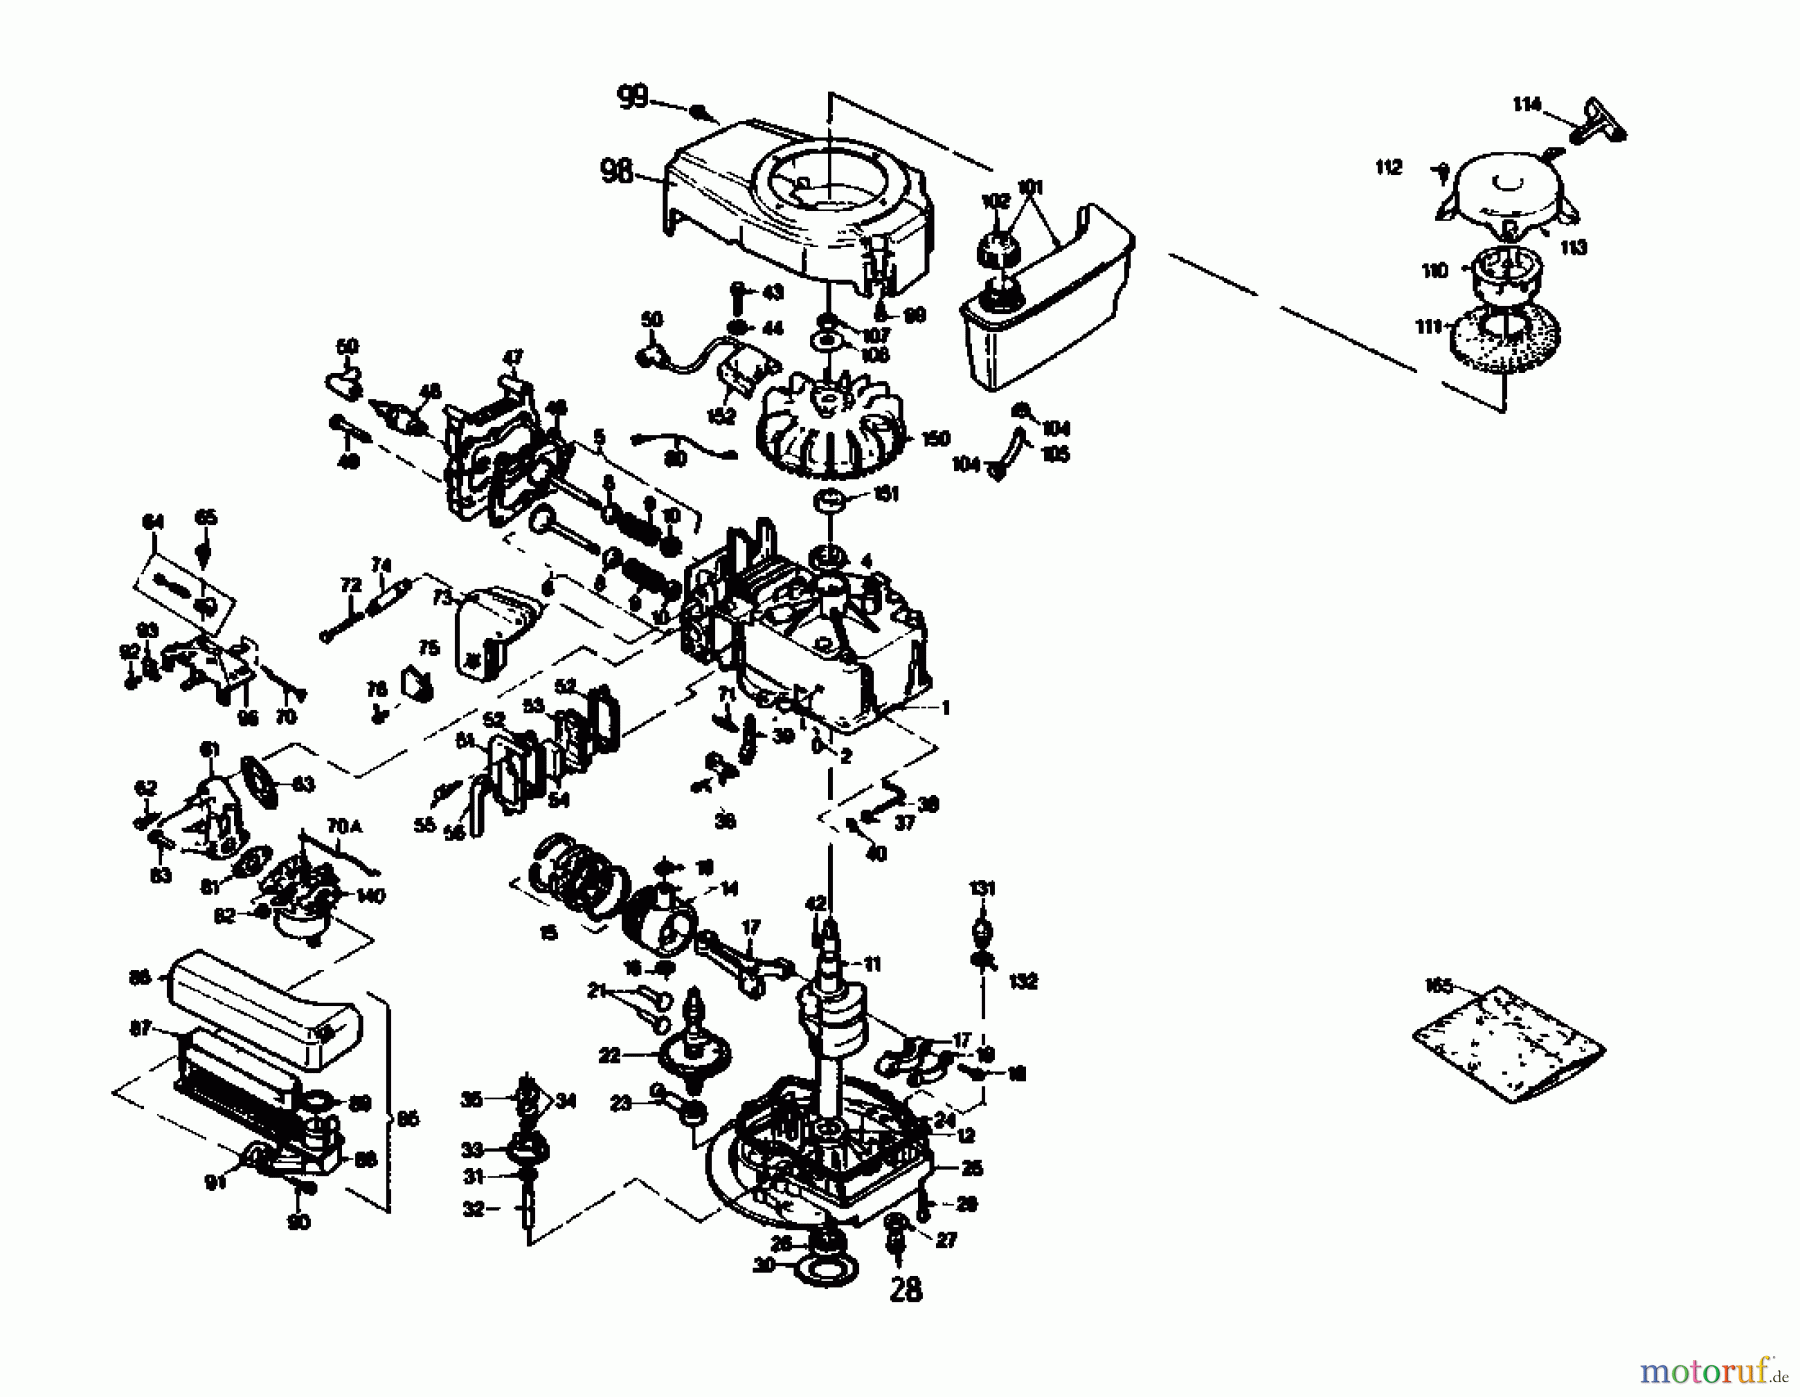  Gutbrod Motormäher mit Antrieb HB 47 R 02847.01  (1988) Kurbelgehäuse, Zylinder